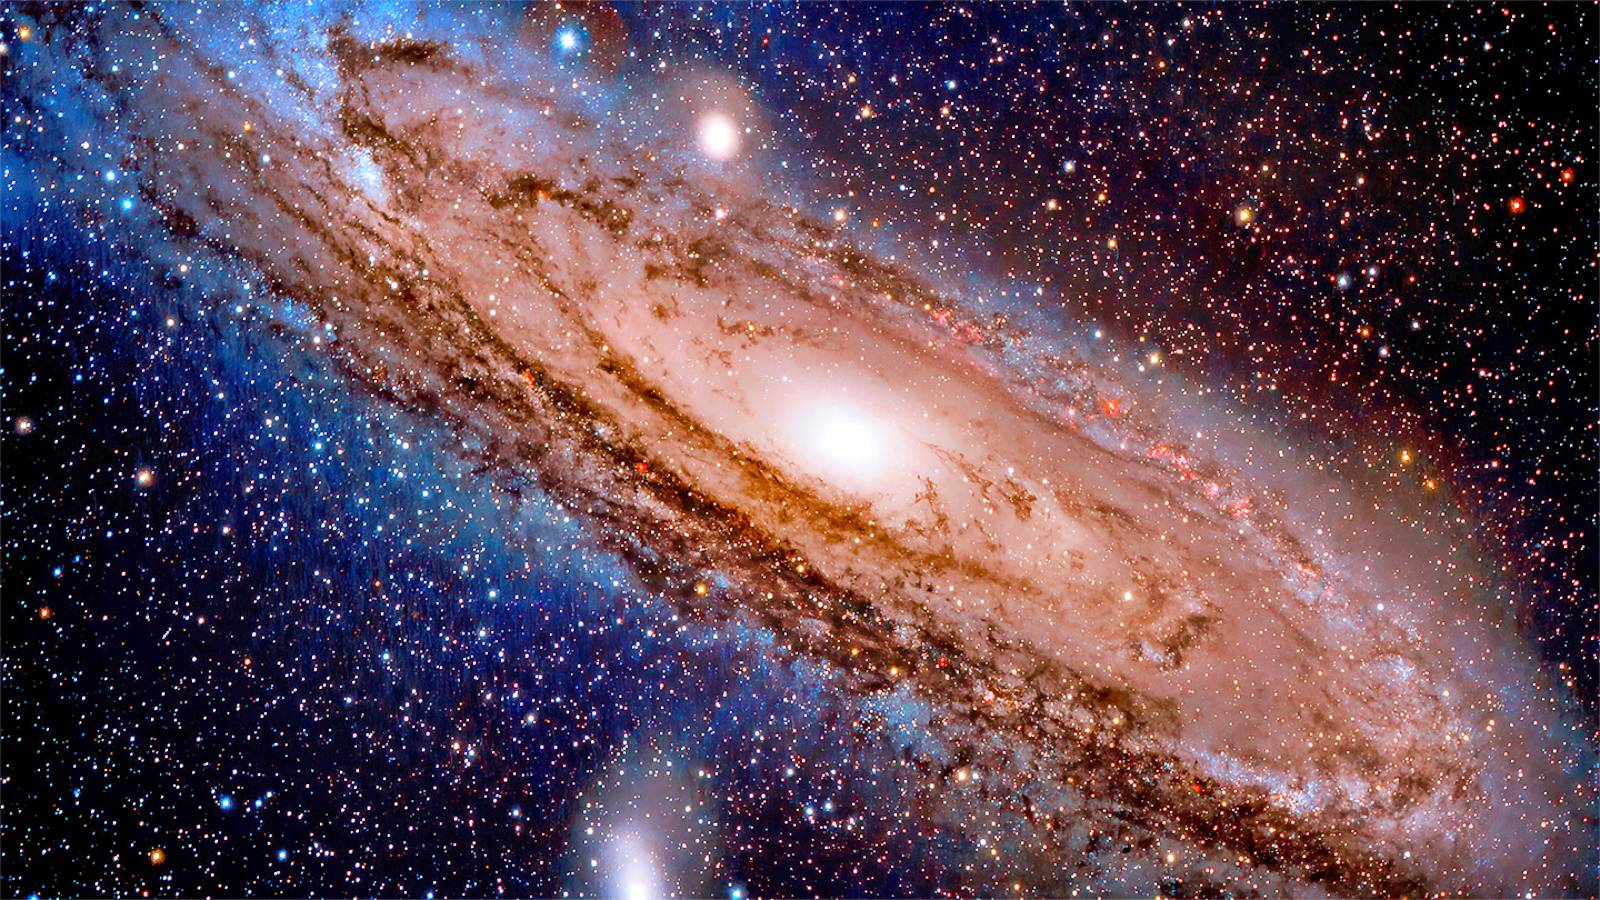 (PHOTO) Movements of the Milky Way Captured by NASA GAIA Telescope